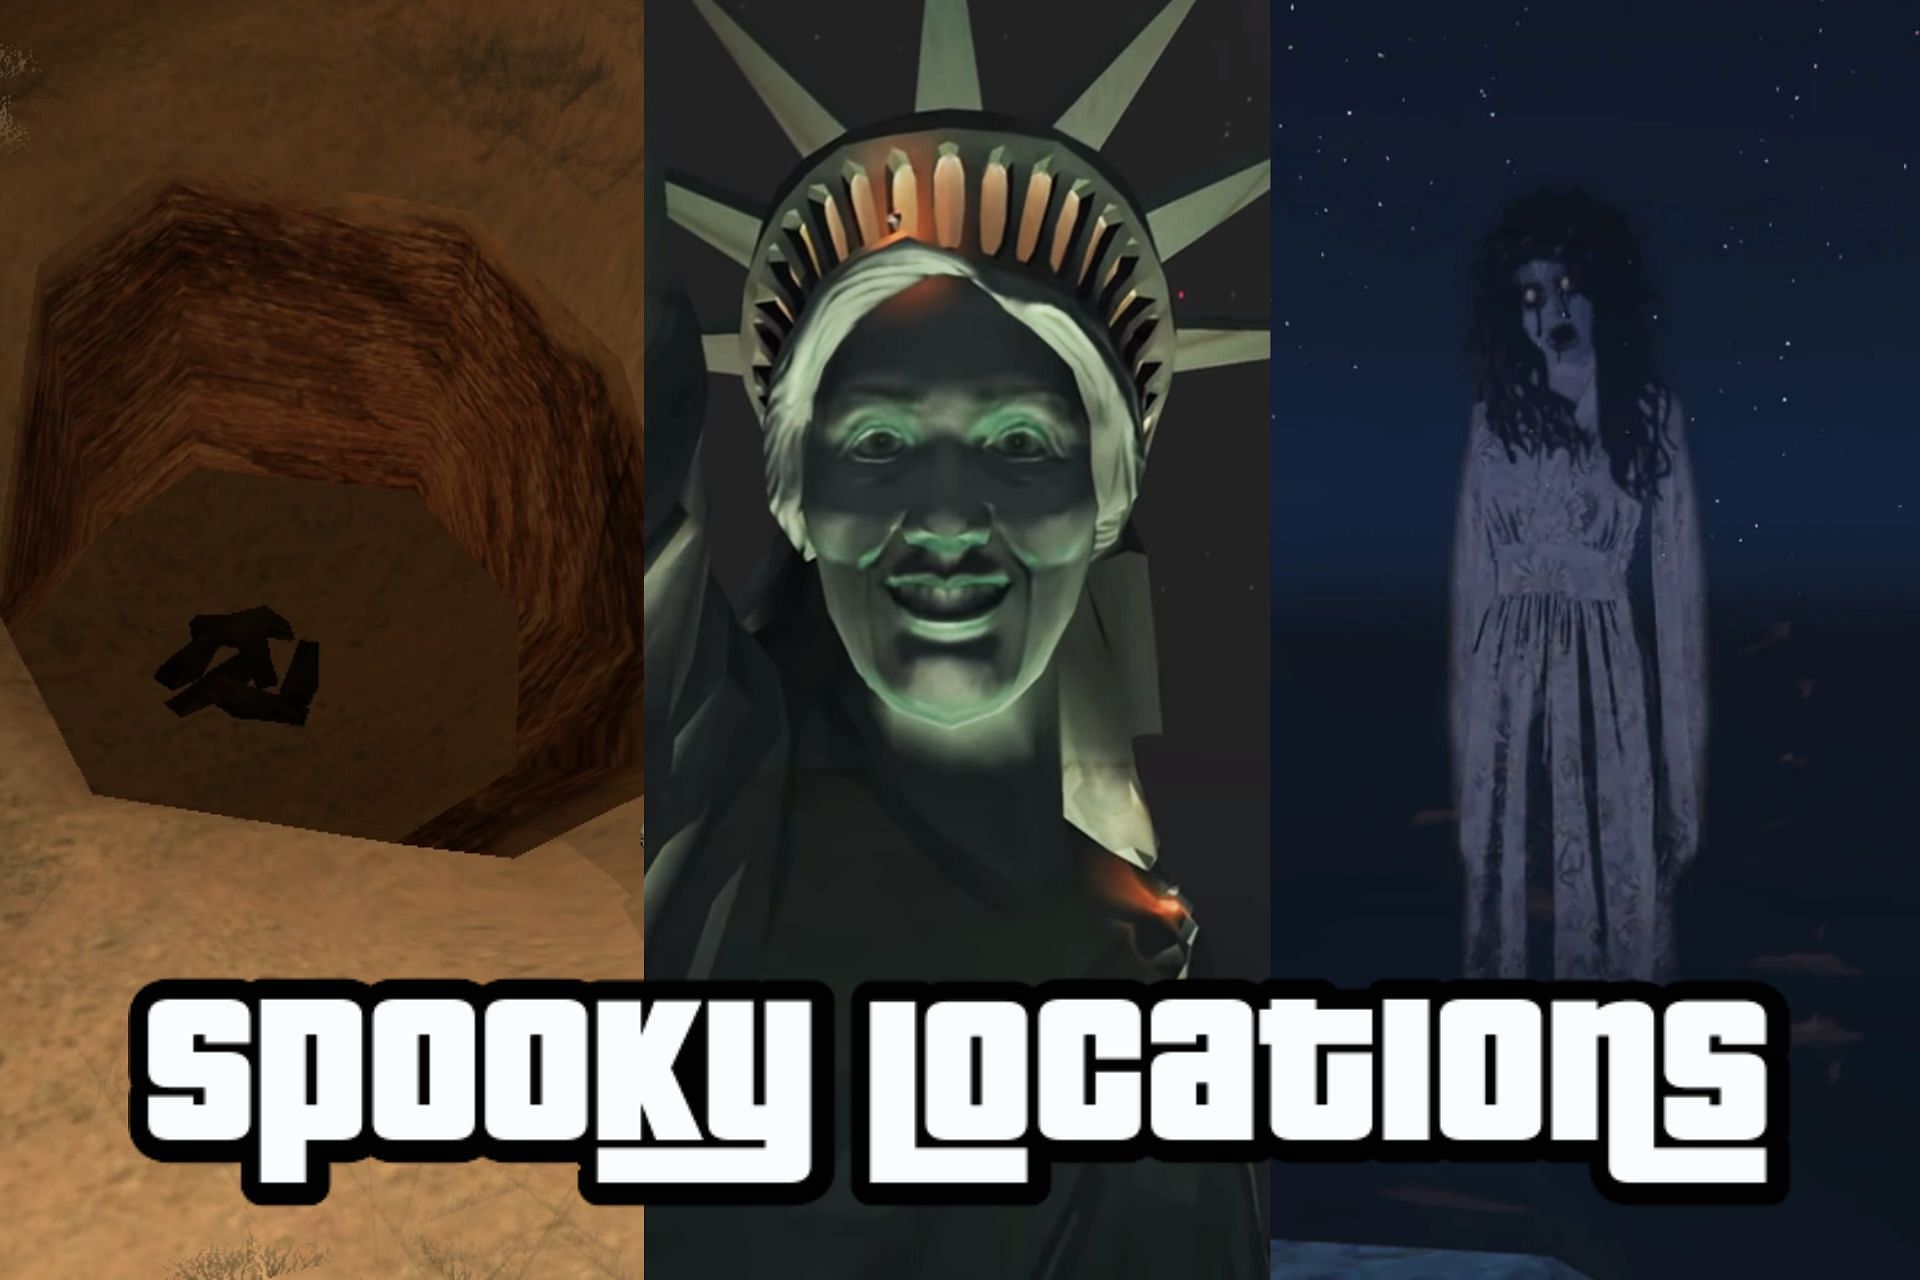 GTA players must visit these spooky locations during Halloween (Image via Sportskeeda)